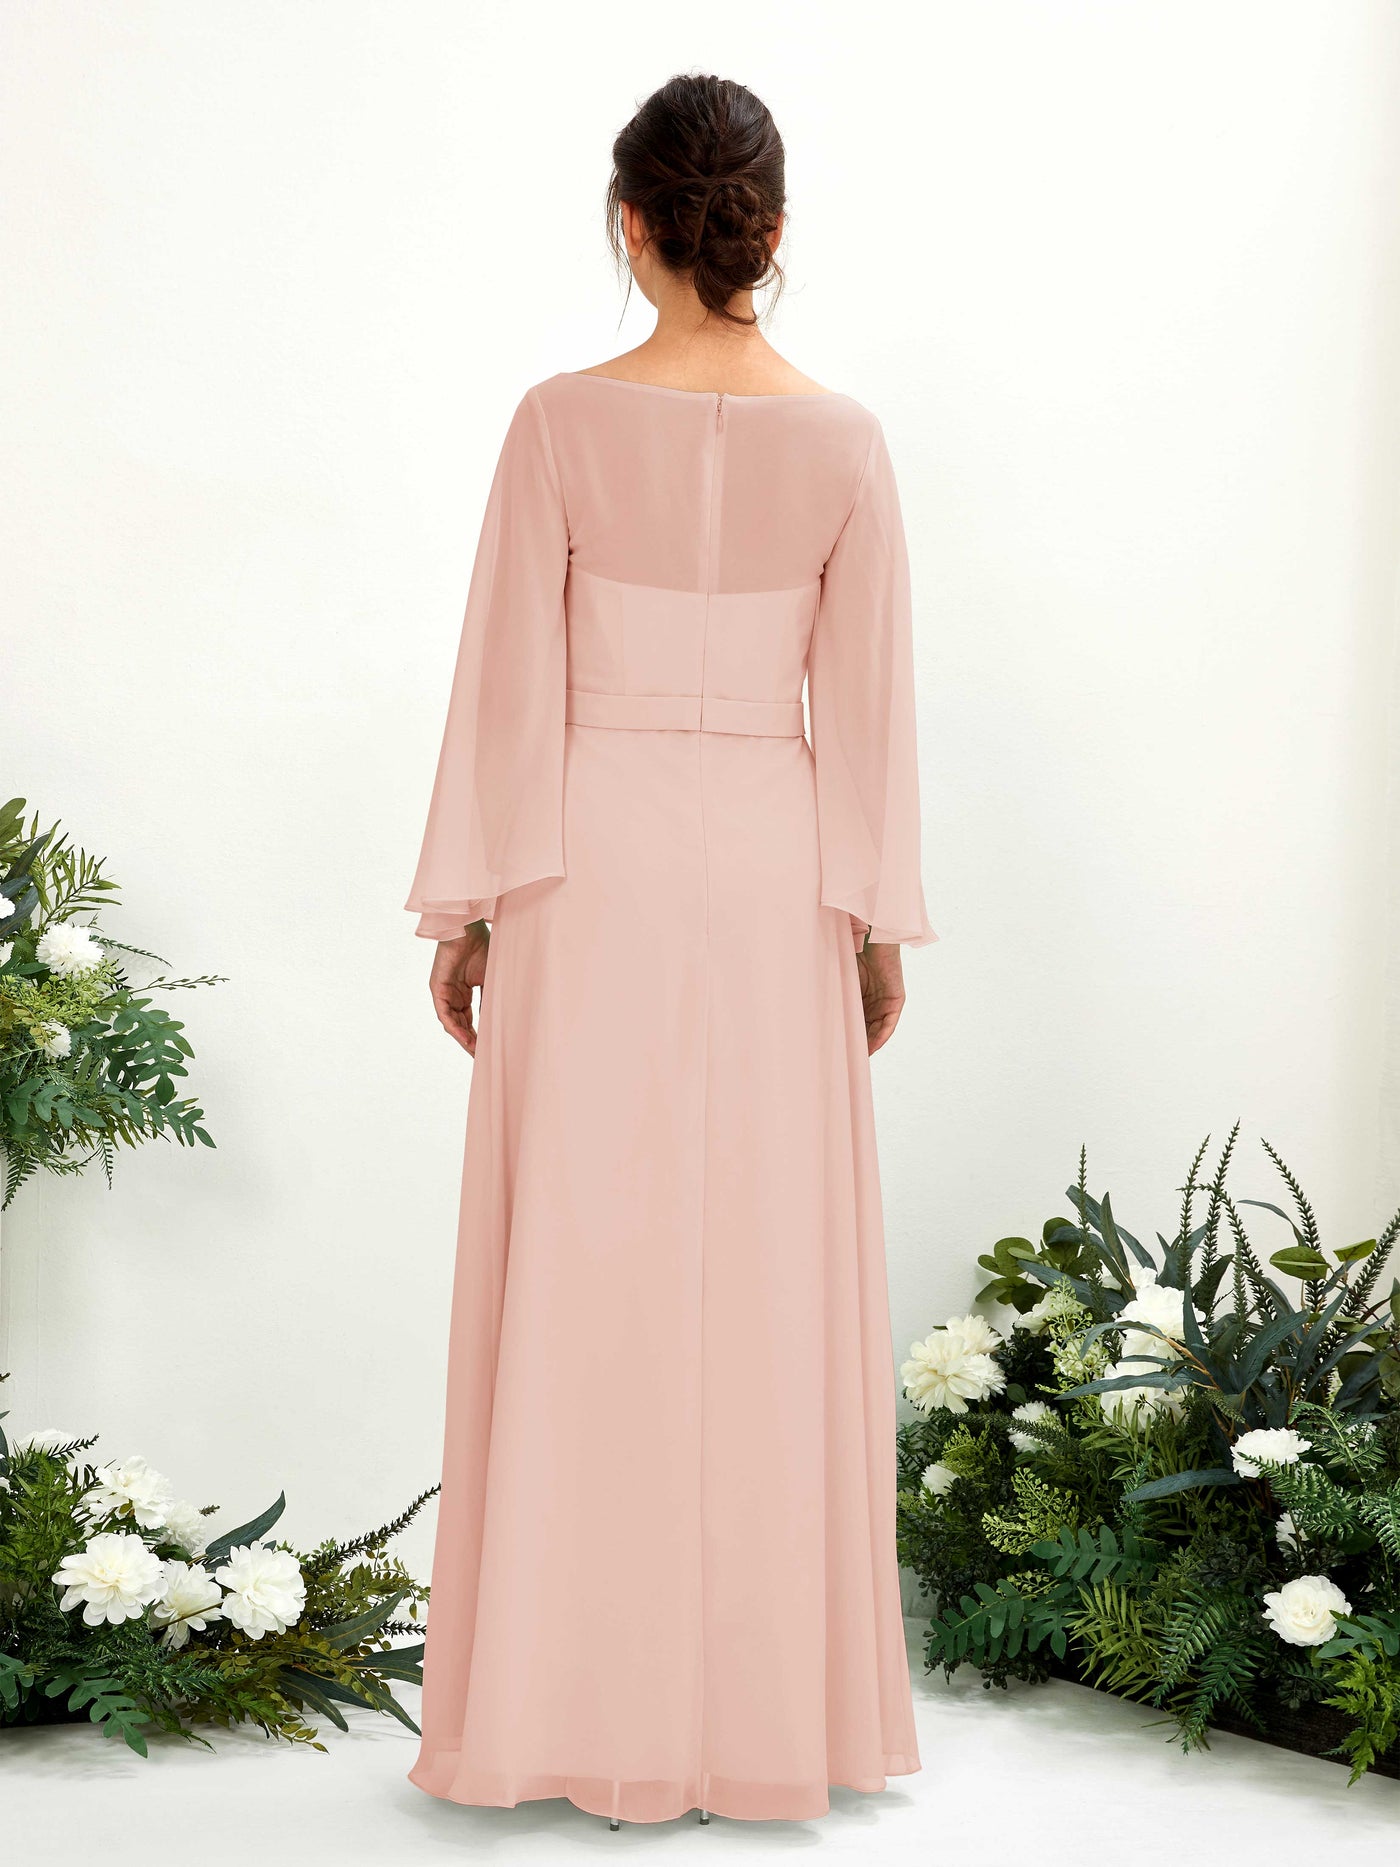 Pearl Pink Bridesmaid Dresses Bridesmaid Dress A-line Chiffon Bateau Full Length Long Sleeves Wedding Party Dress (81220508)#color_pearl-pink